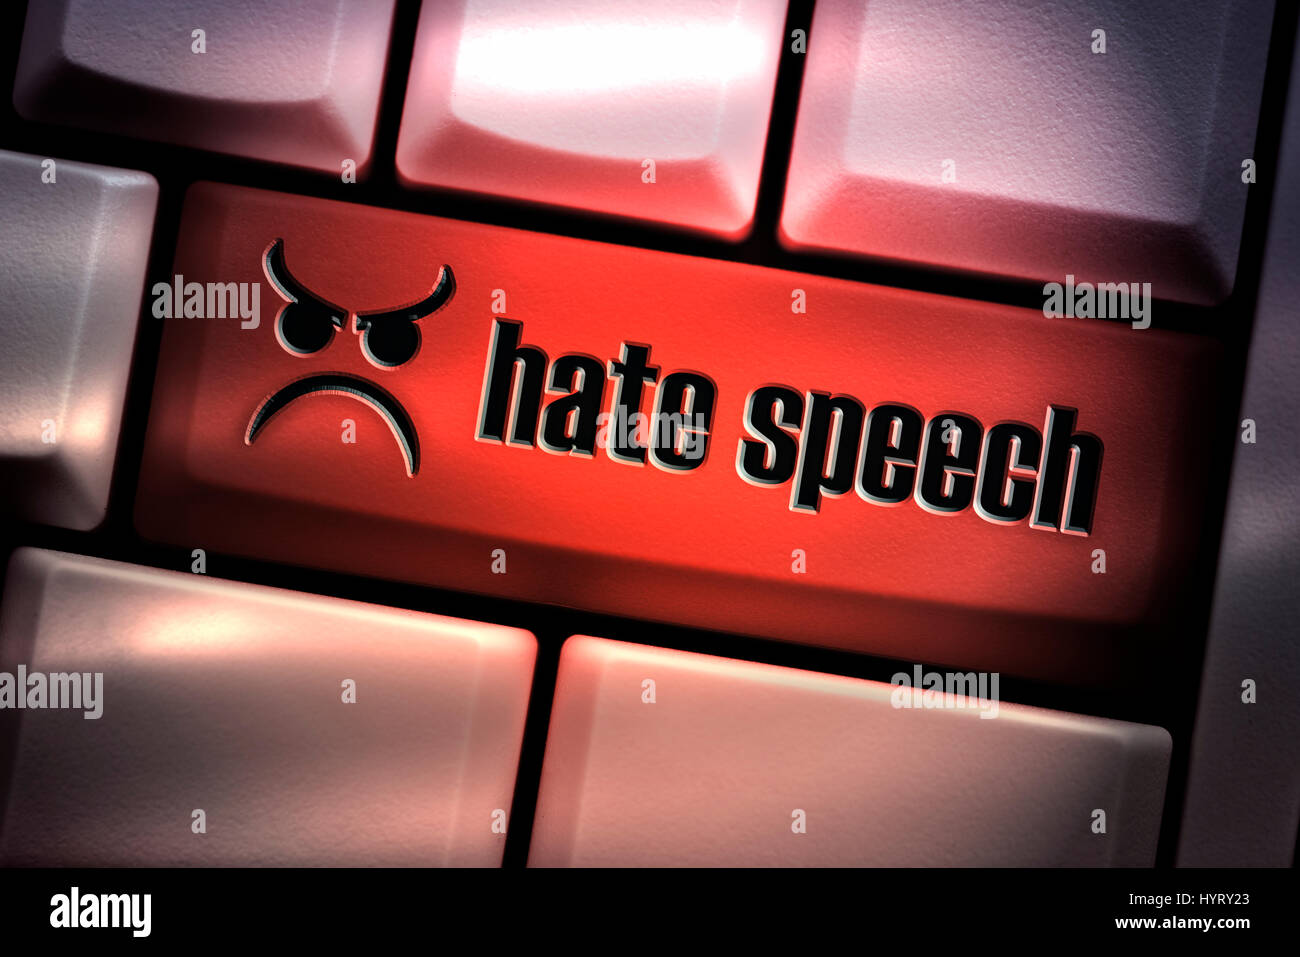 Hate speech key on computer keyboard Stock Photo